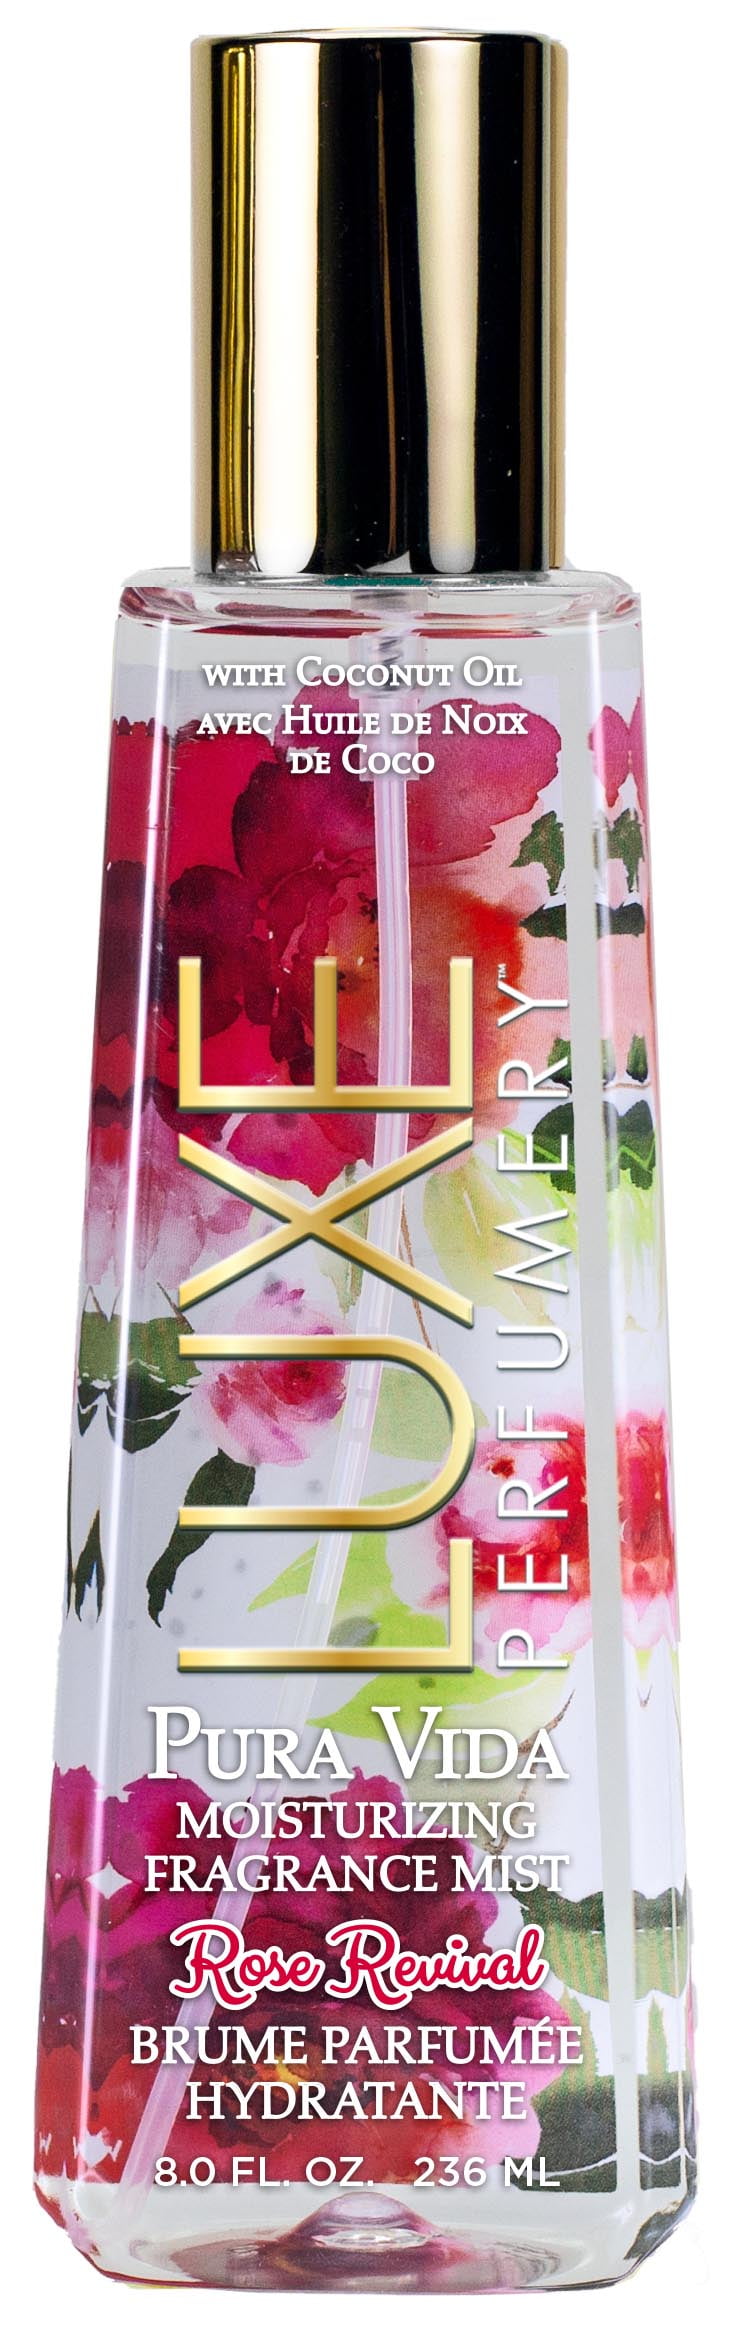 Luxe Perfumery Pura Vida Rose Revival Body Spray for Women, 8 Oz 